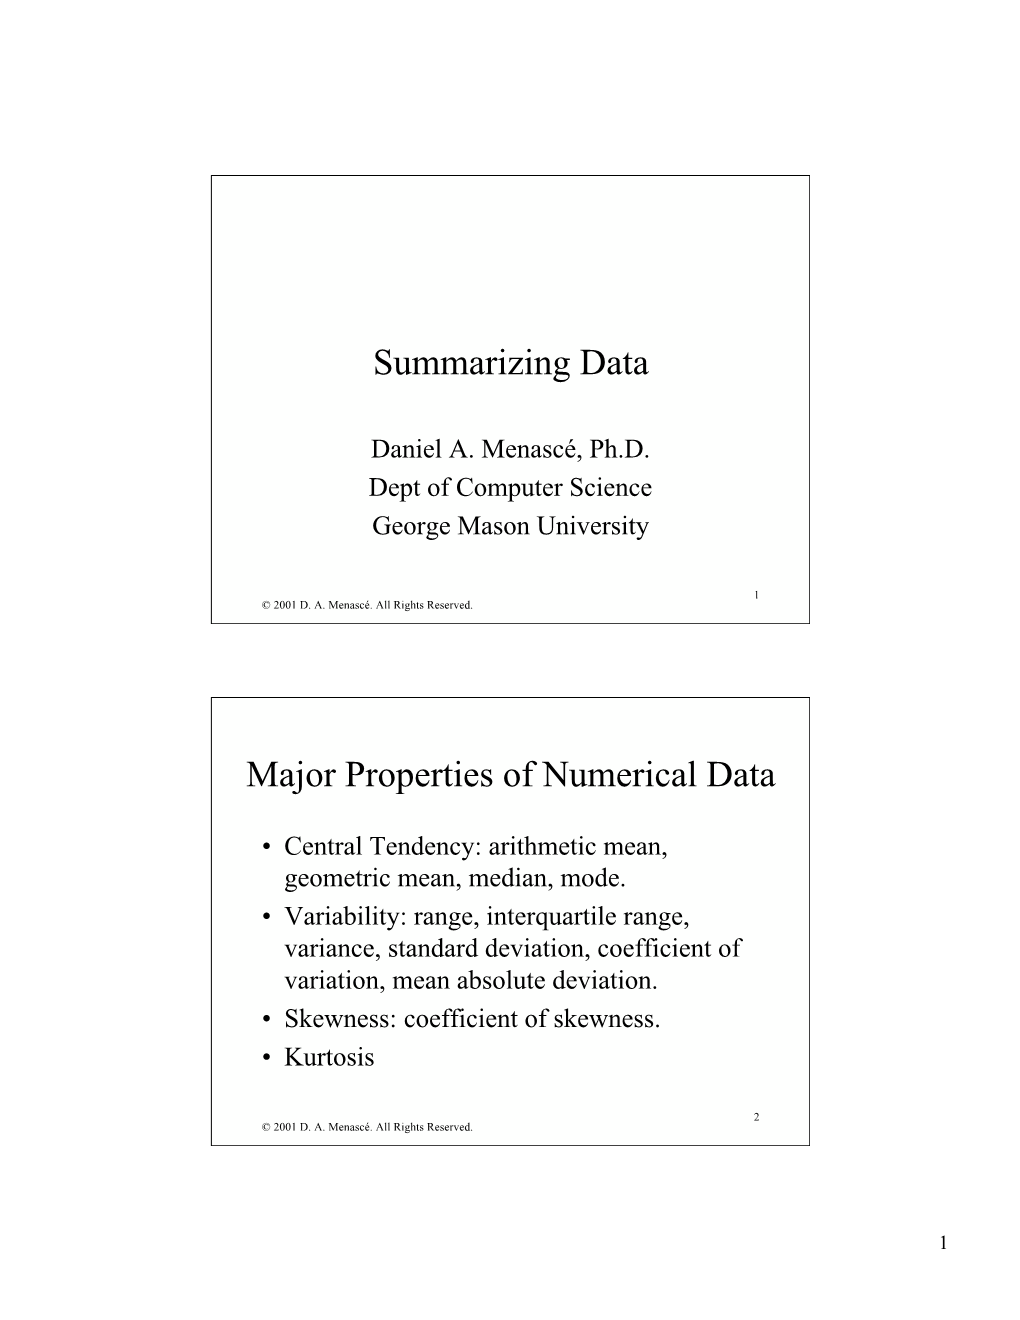 Summarizing Data Major Properties of Numerical Data